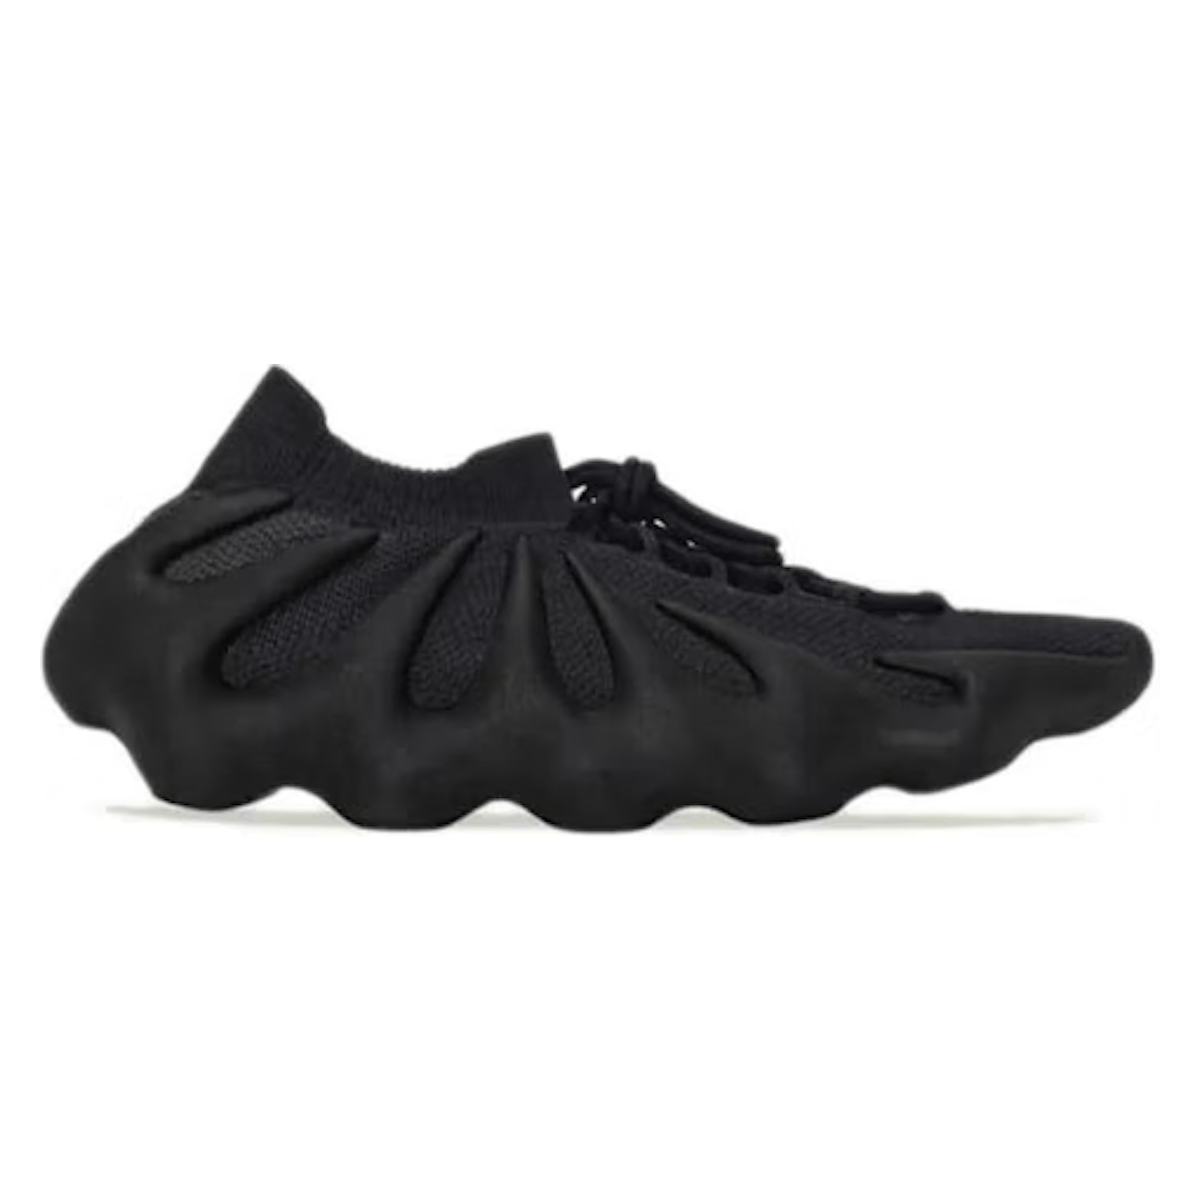 adidas Yeezy 450 "Utility Black"